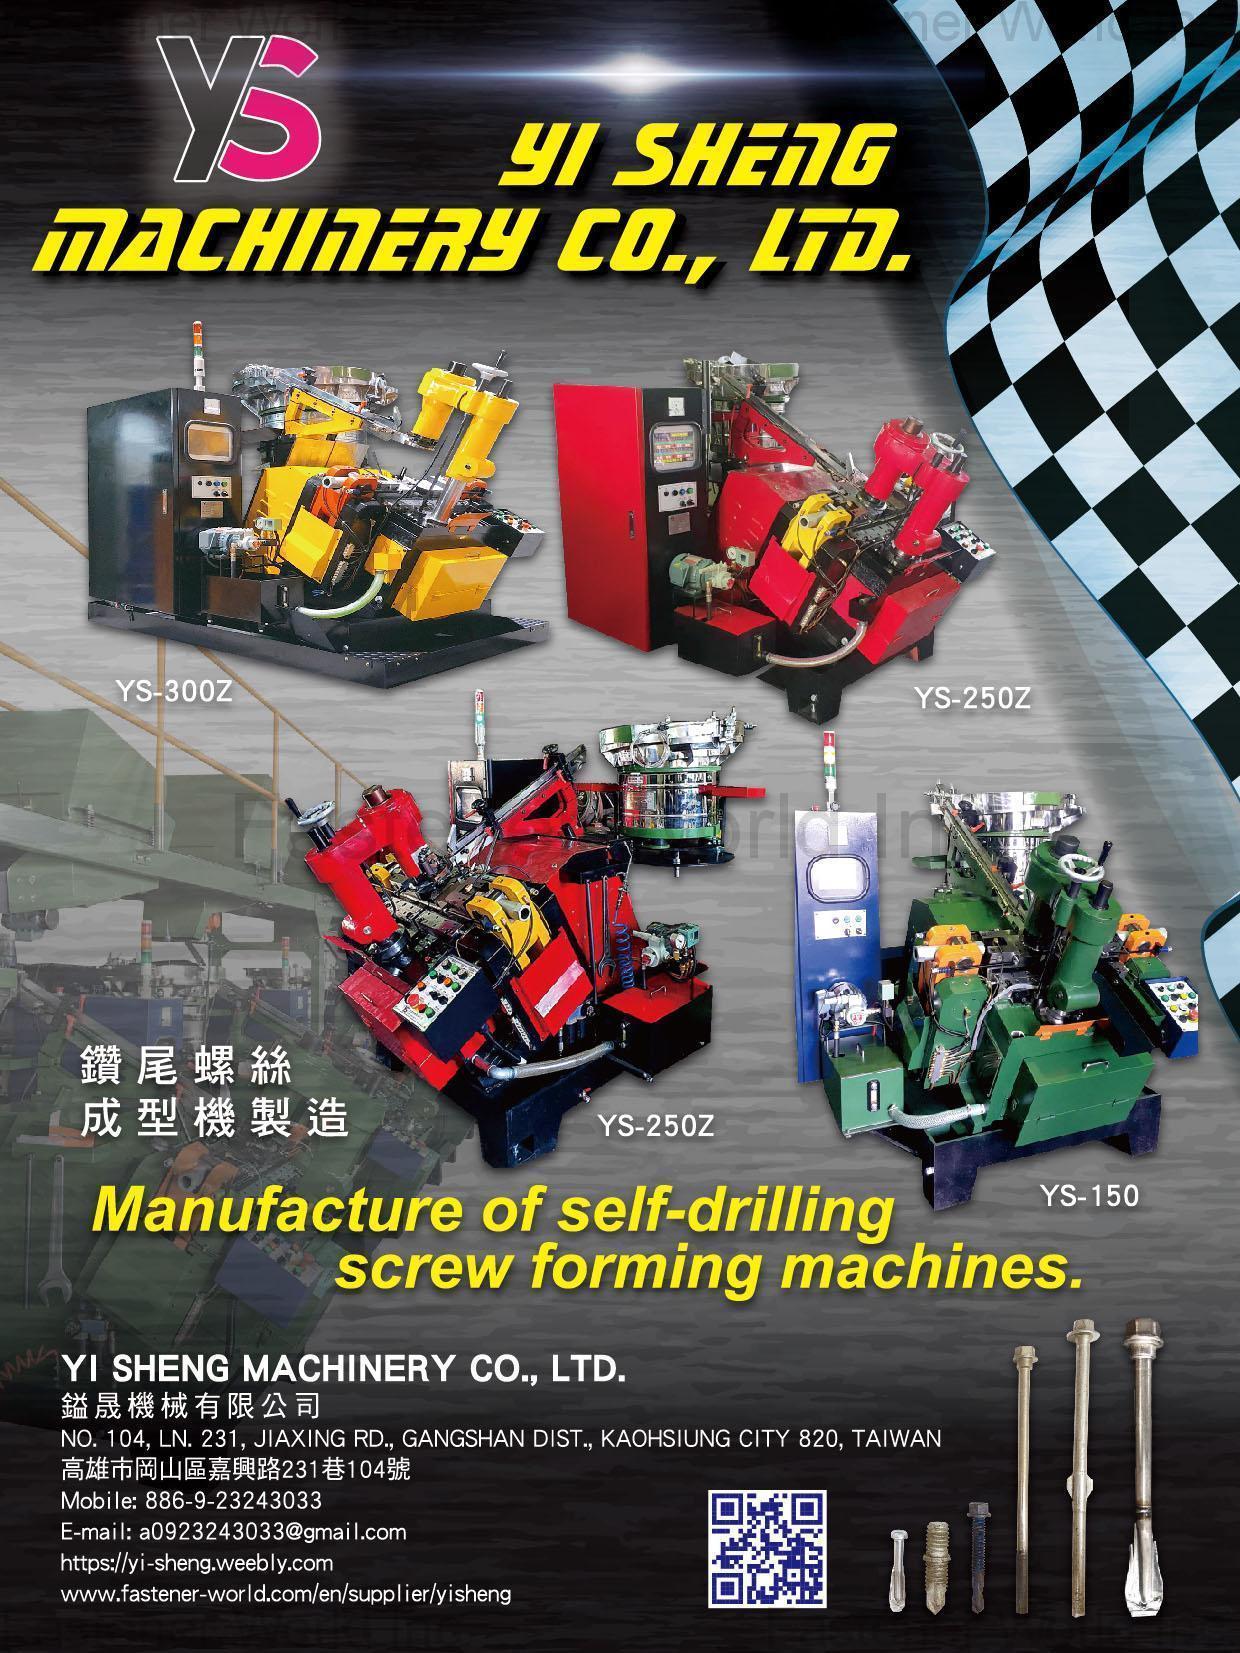 YI SHENG MACHINERY CO., LTD. , YS SELF-DRILLING SCREW FORMING MACHINES